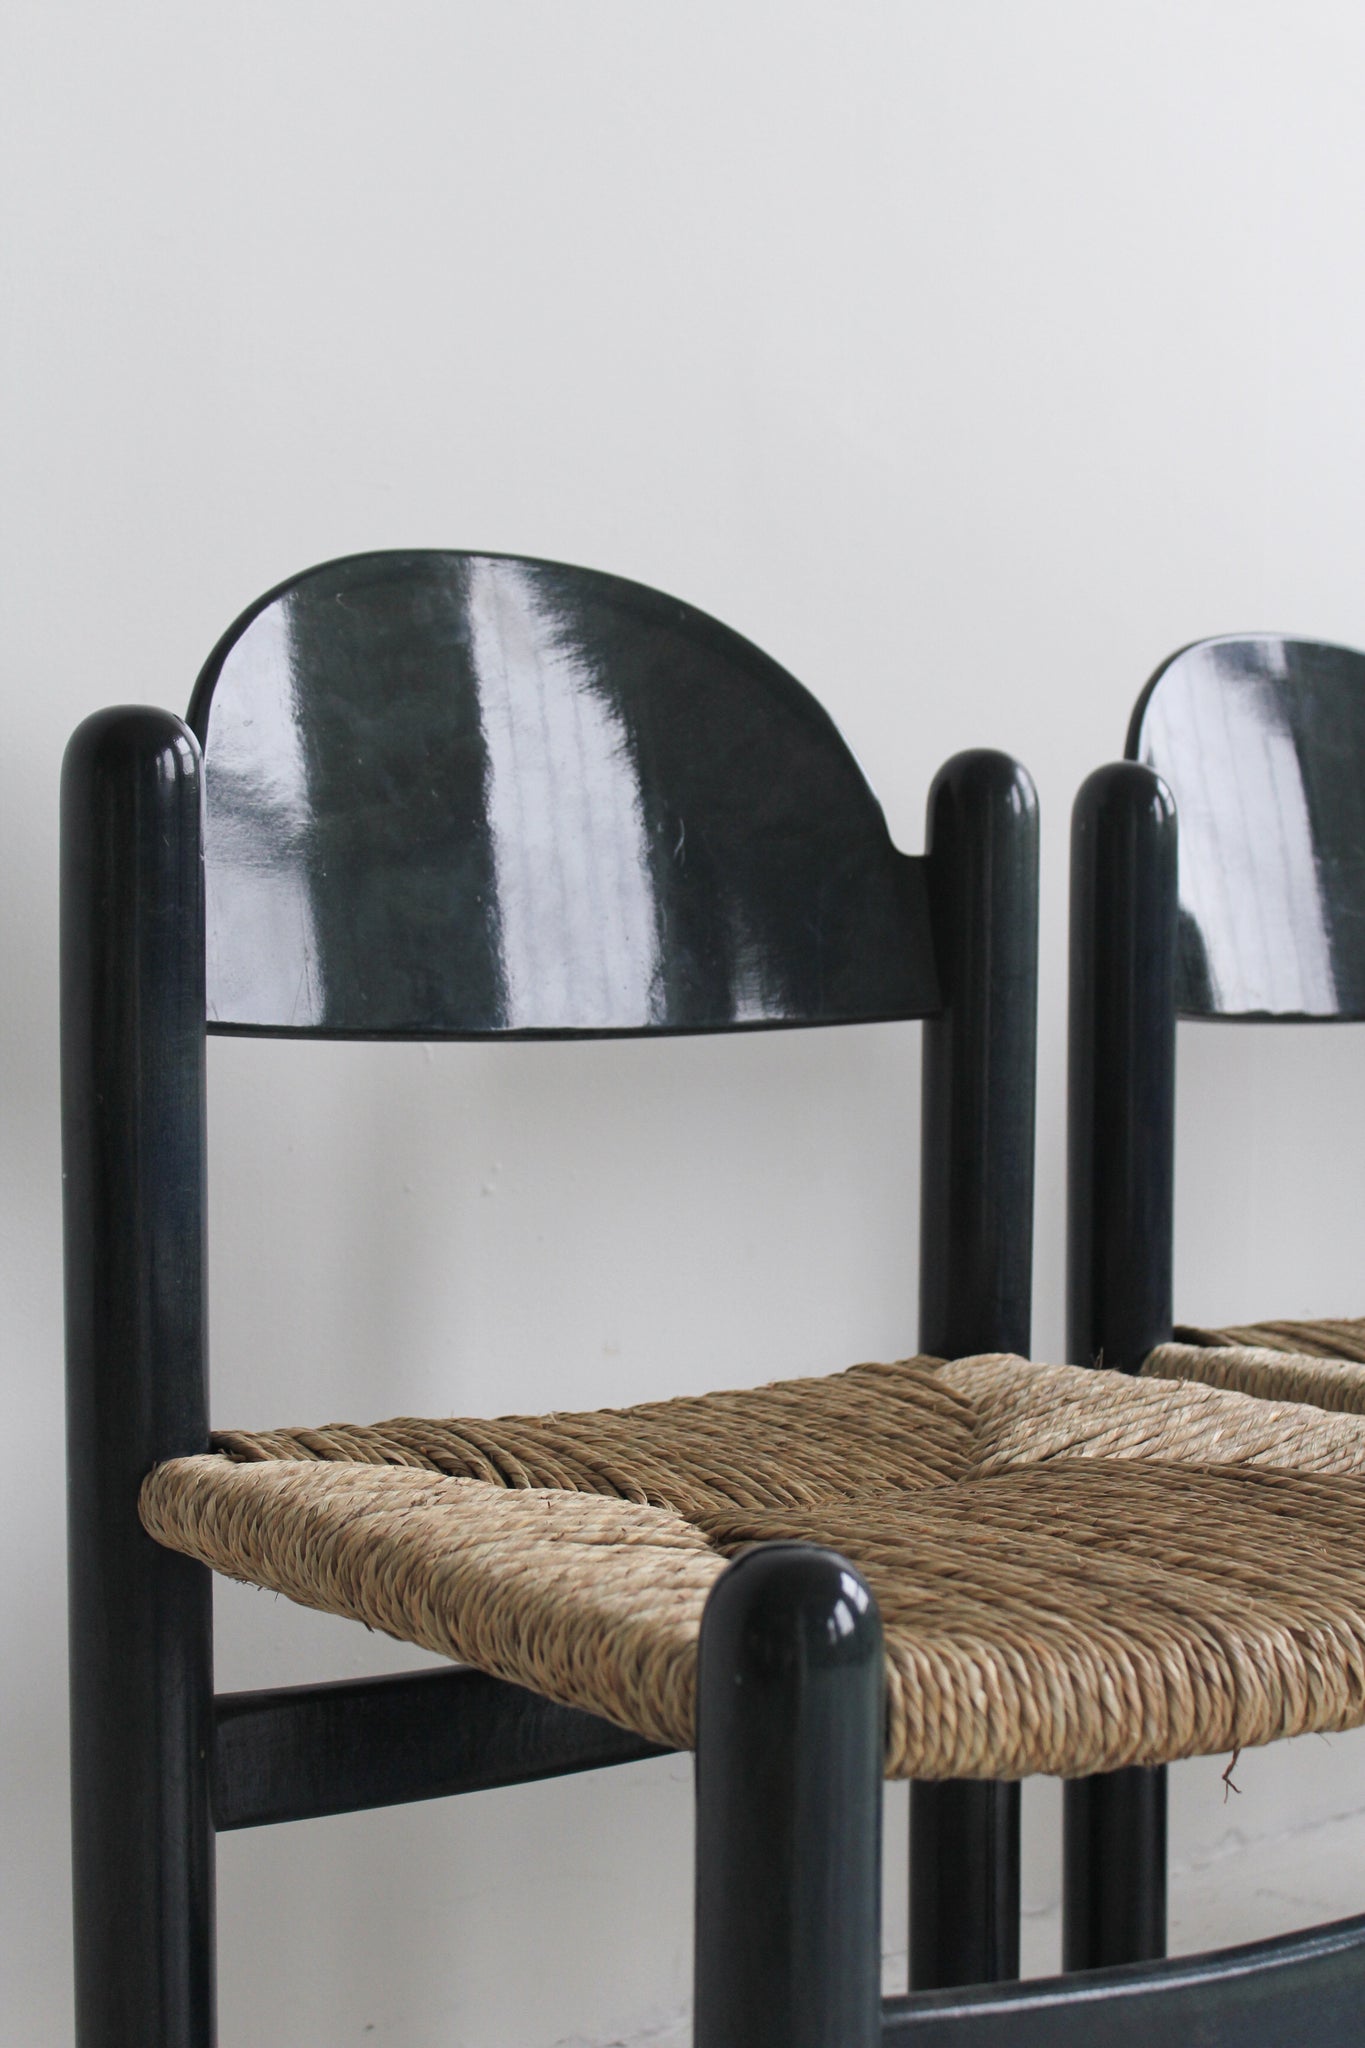 Padova Chairs by Hank Lowenstein